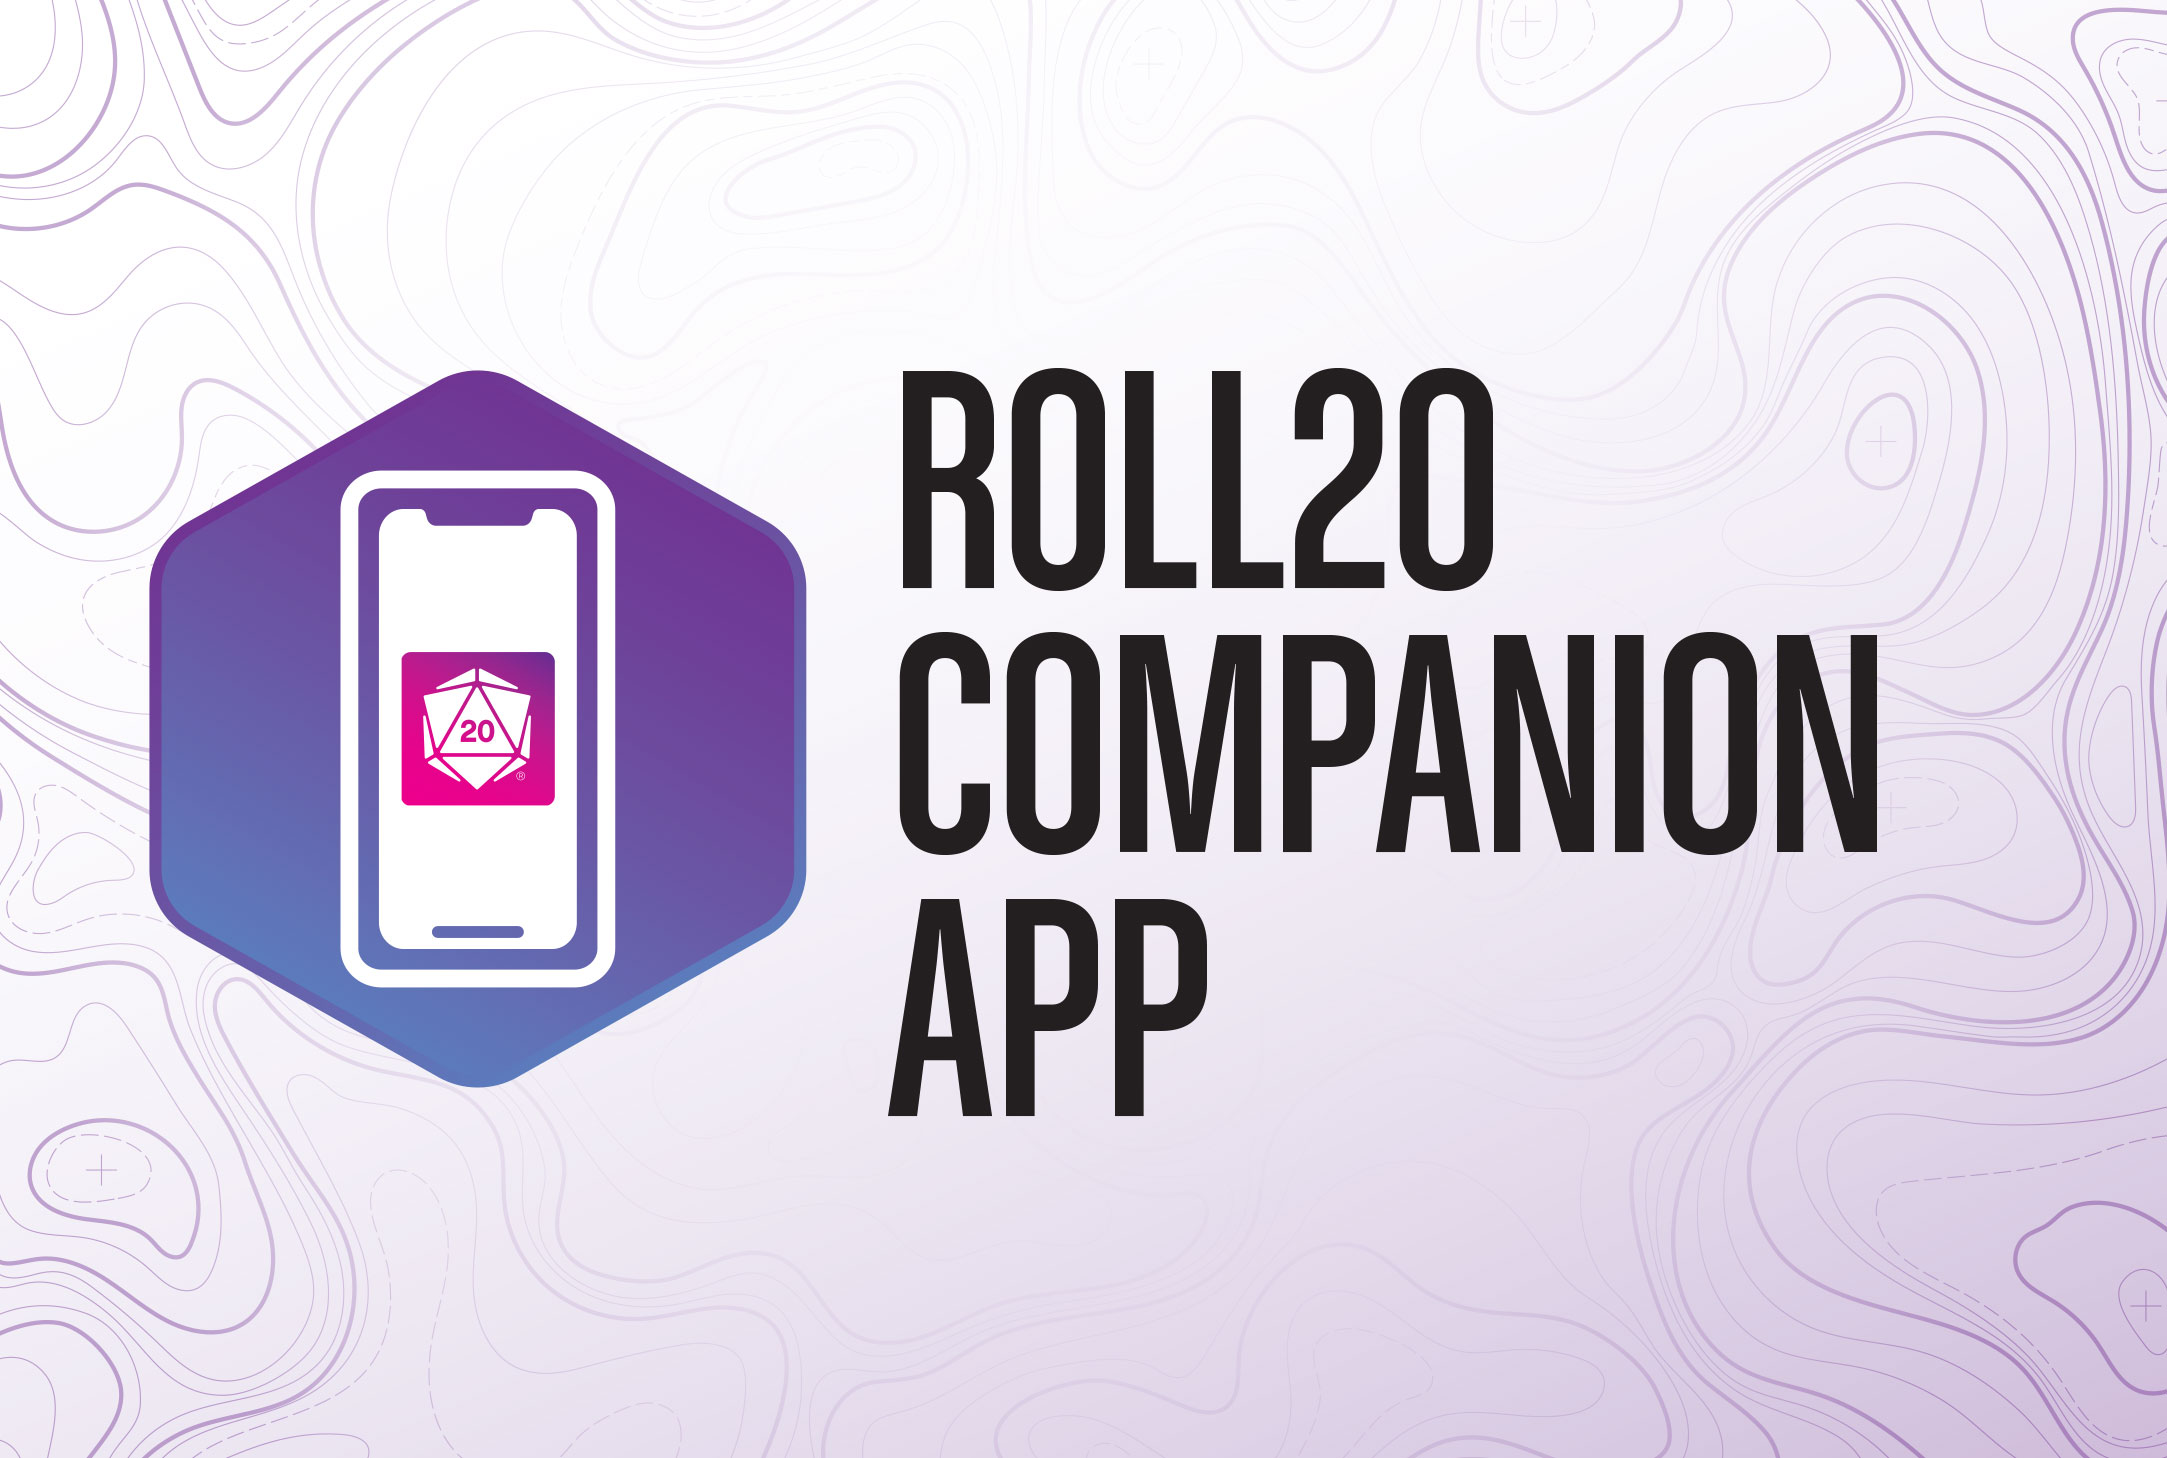 Roll20 Companion App